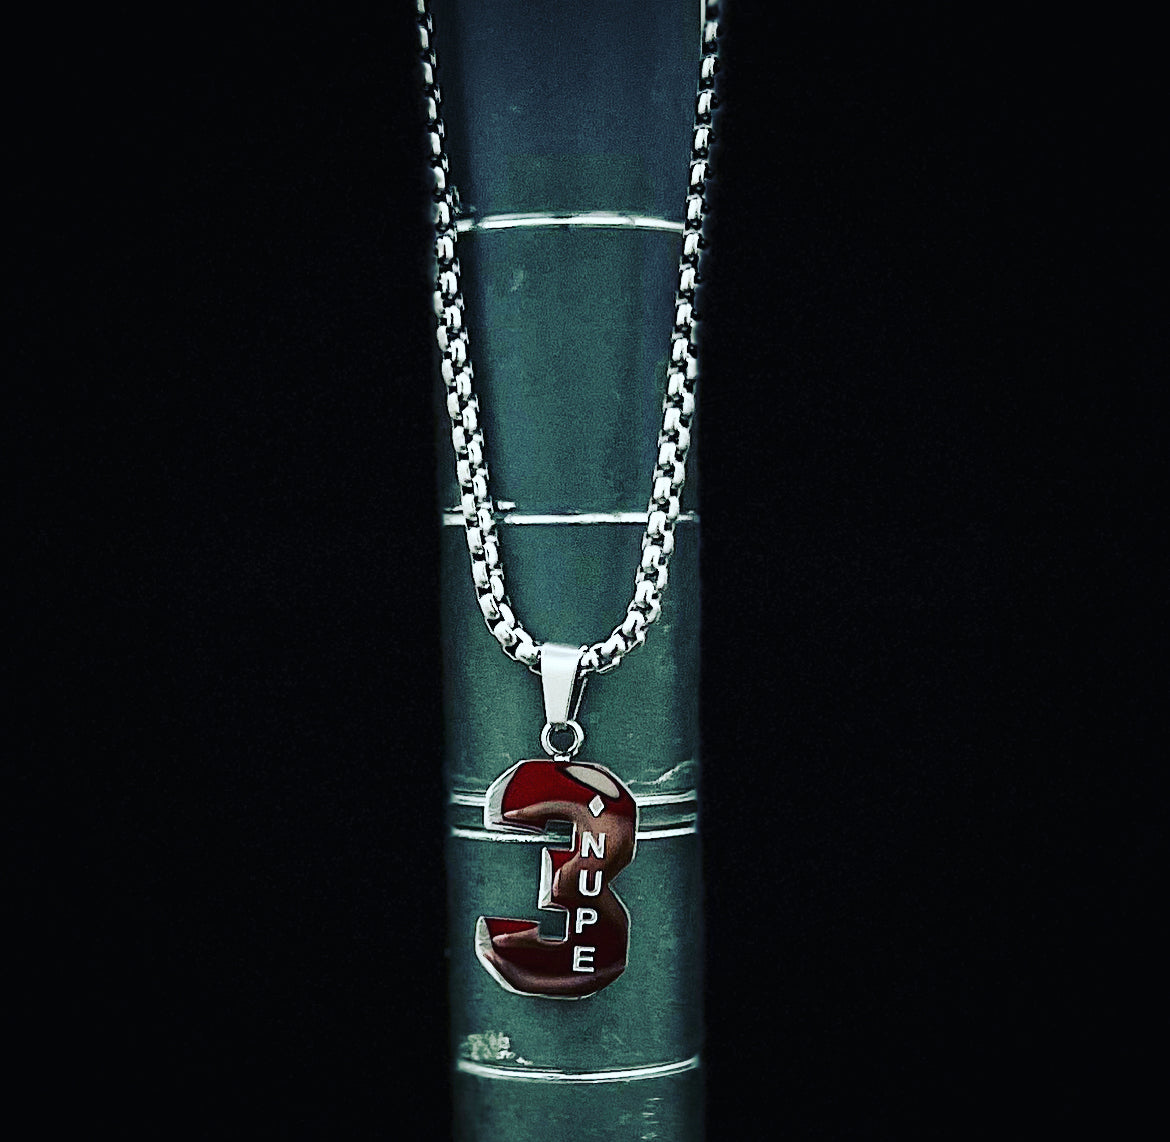 Kappa Alpha Psi Necklace, Jewelry - Worldwide origins